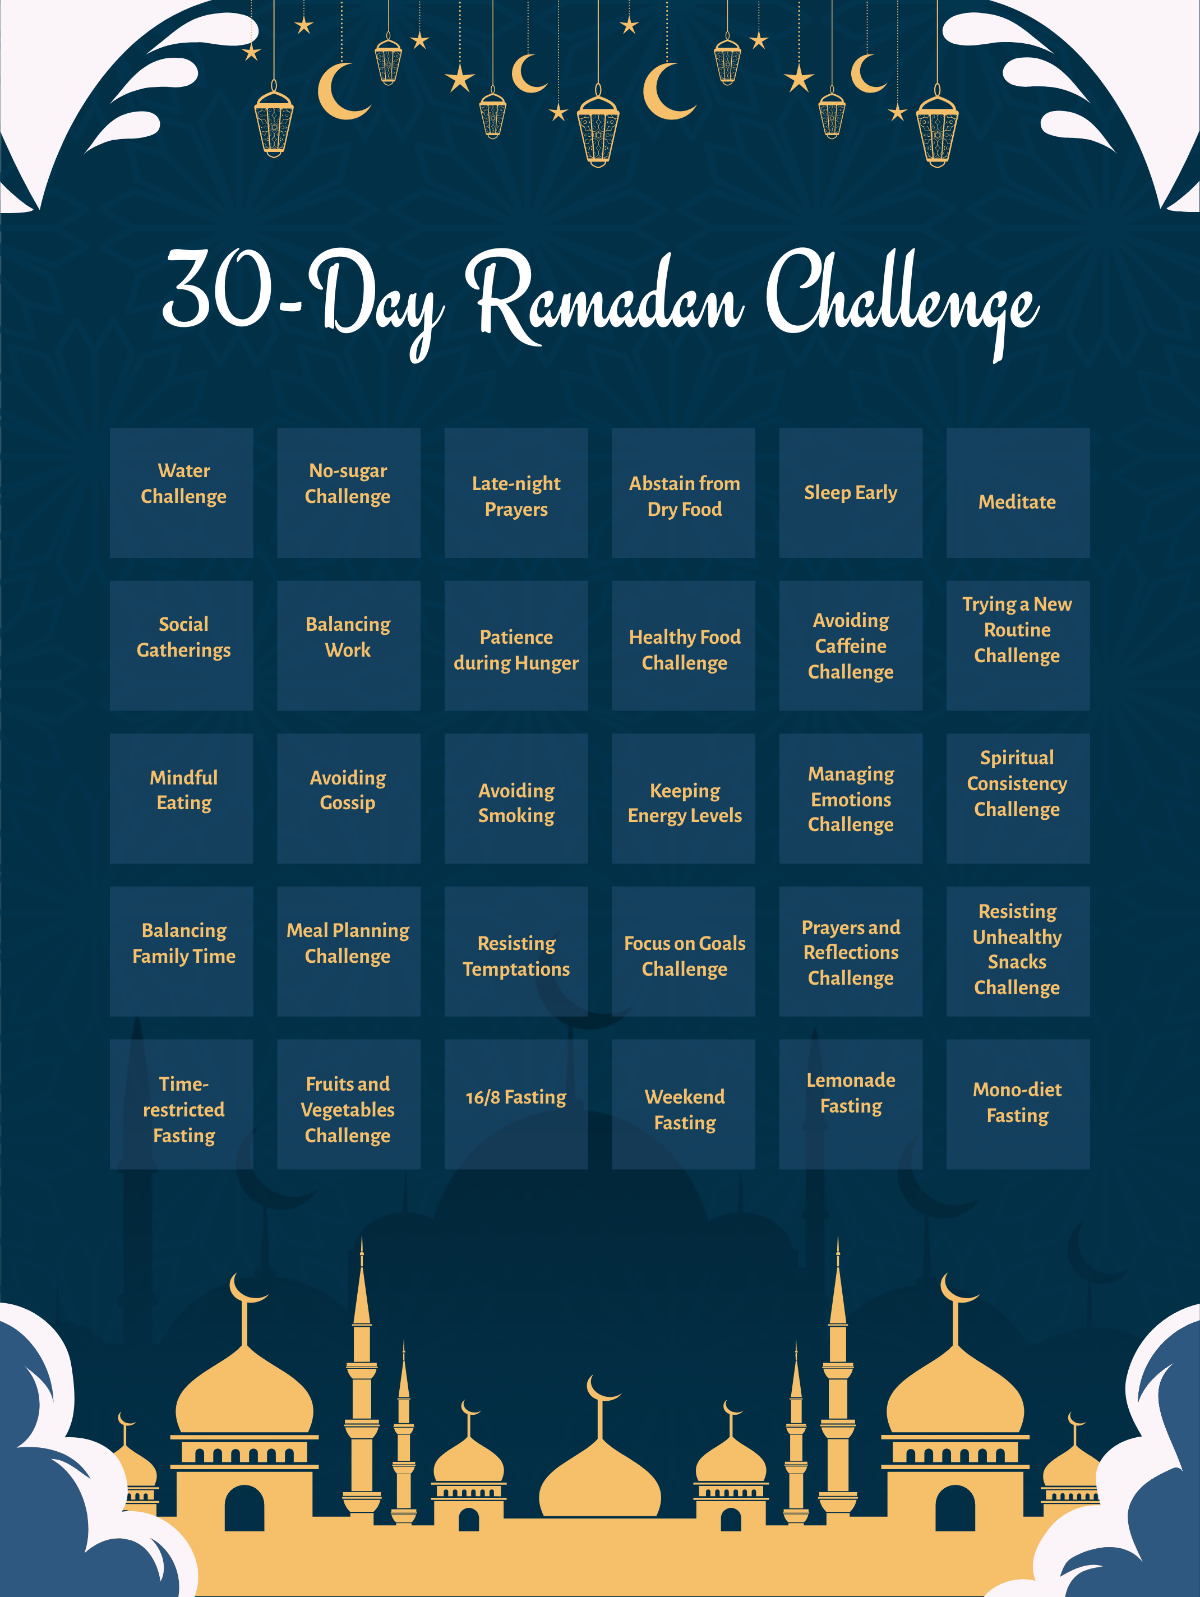 30 Days Ramadan Challenge